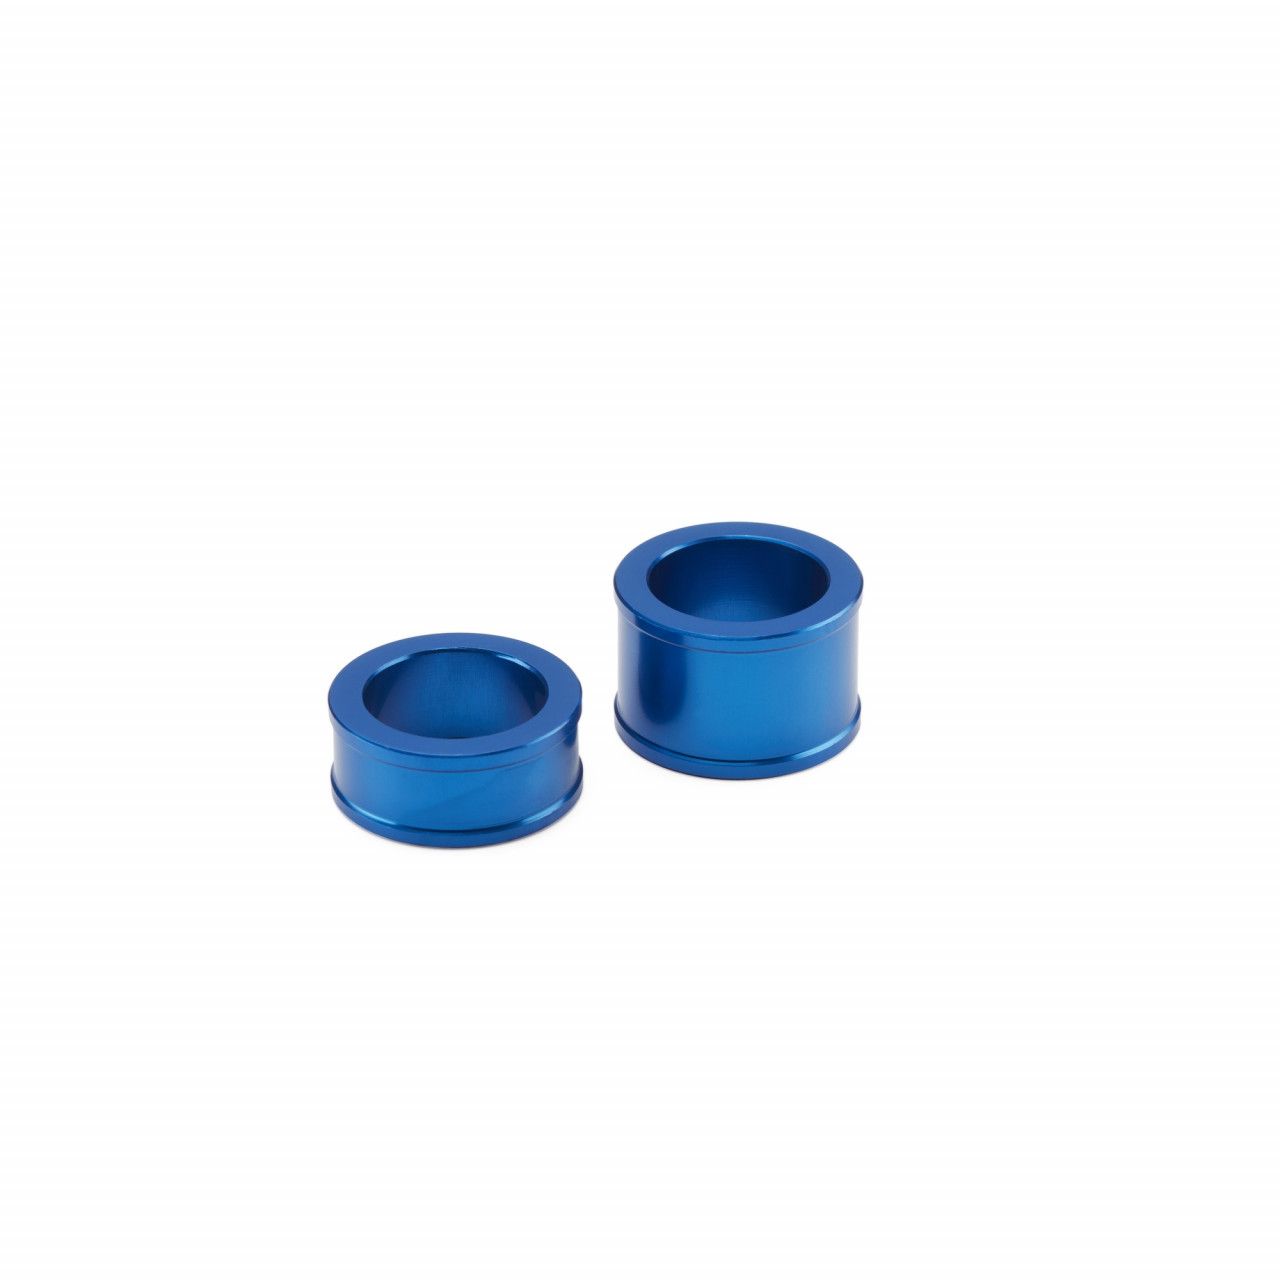 YAMAHA Entretoises bleues pour roue avant - Axe 20 mm YZ - 1SRF20520BL0